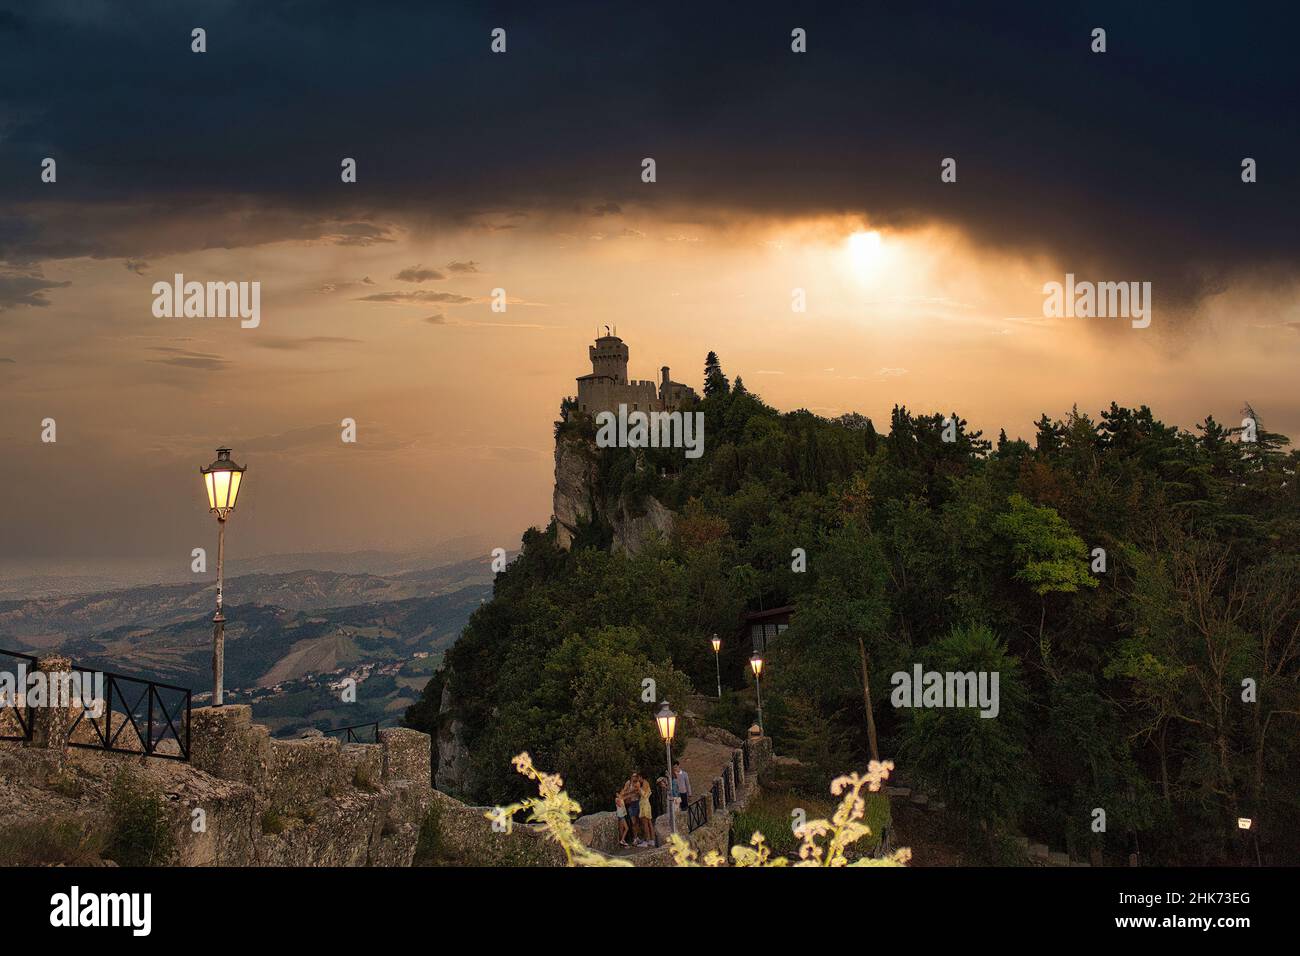 A Magnificent sunset that illuminates Rocca della Guaita, the most famous and ancient castle fortress in the Republic of San Marino Italy Stock Photo